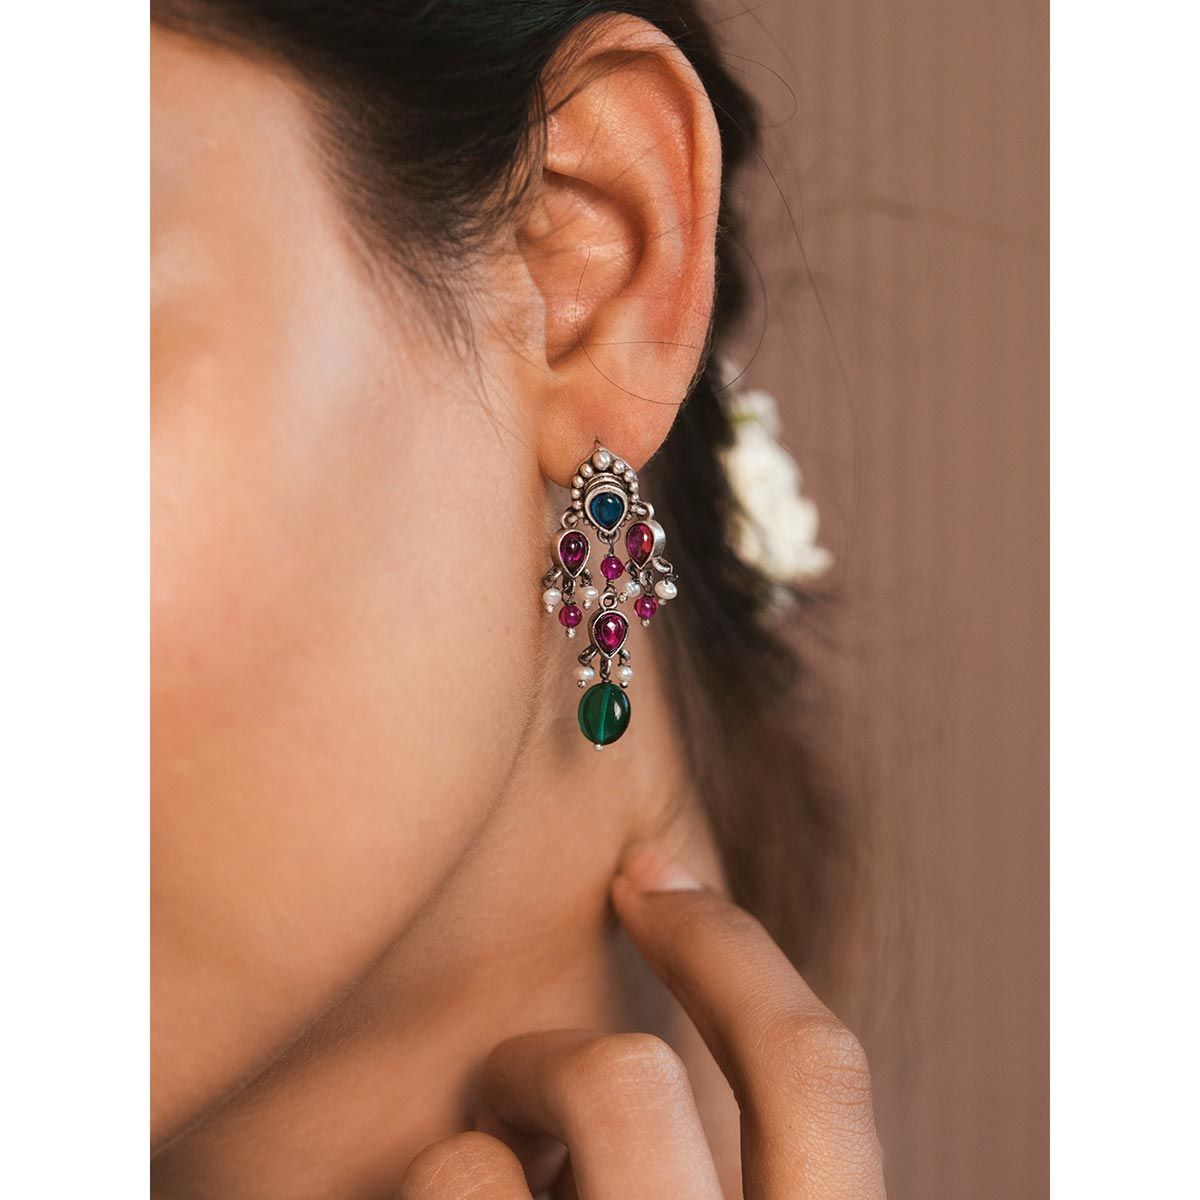 Gossip Hexadic Charm Chandelier Earrings Buy Gossip Hexadic Charm Chandelier  Earrings Online at Best Price in India  Nykaa